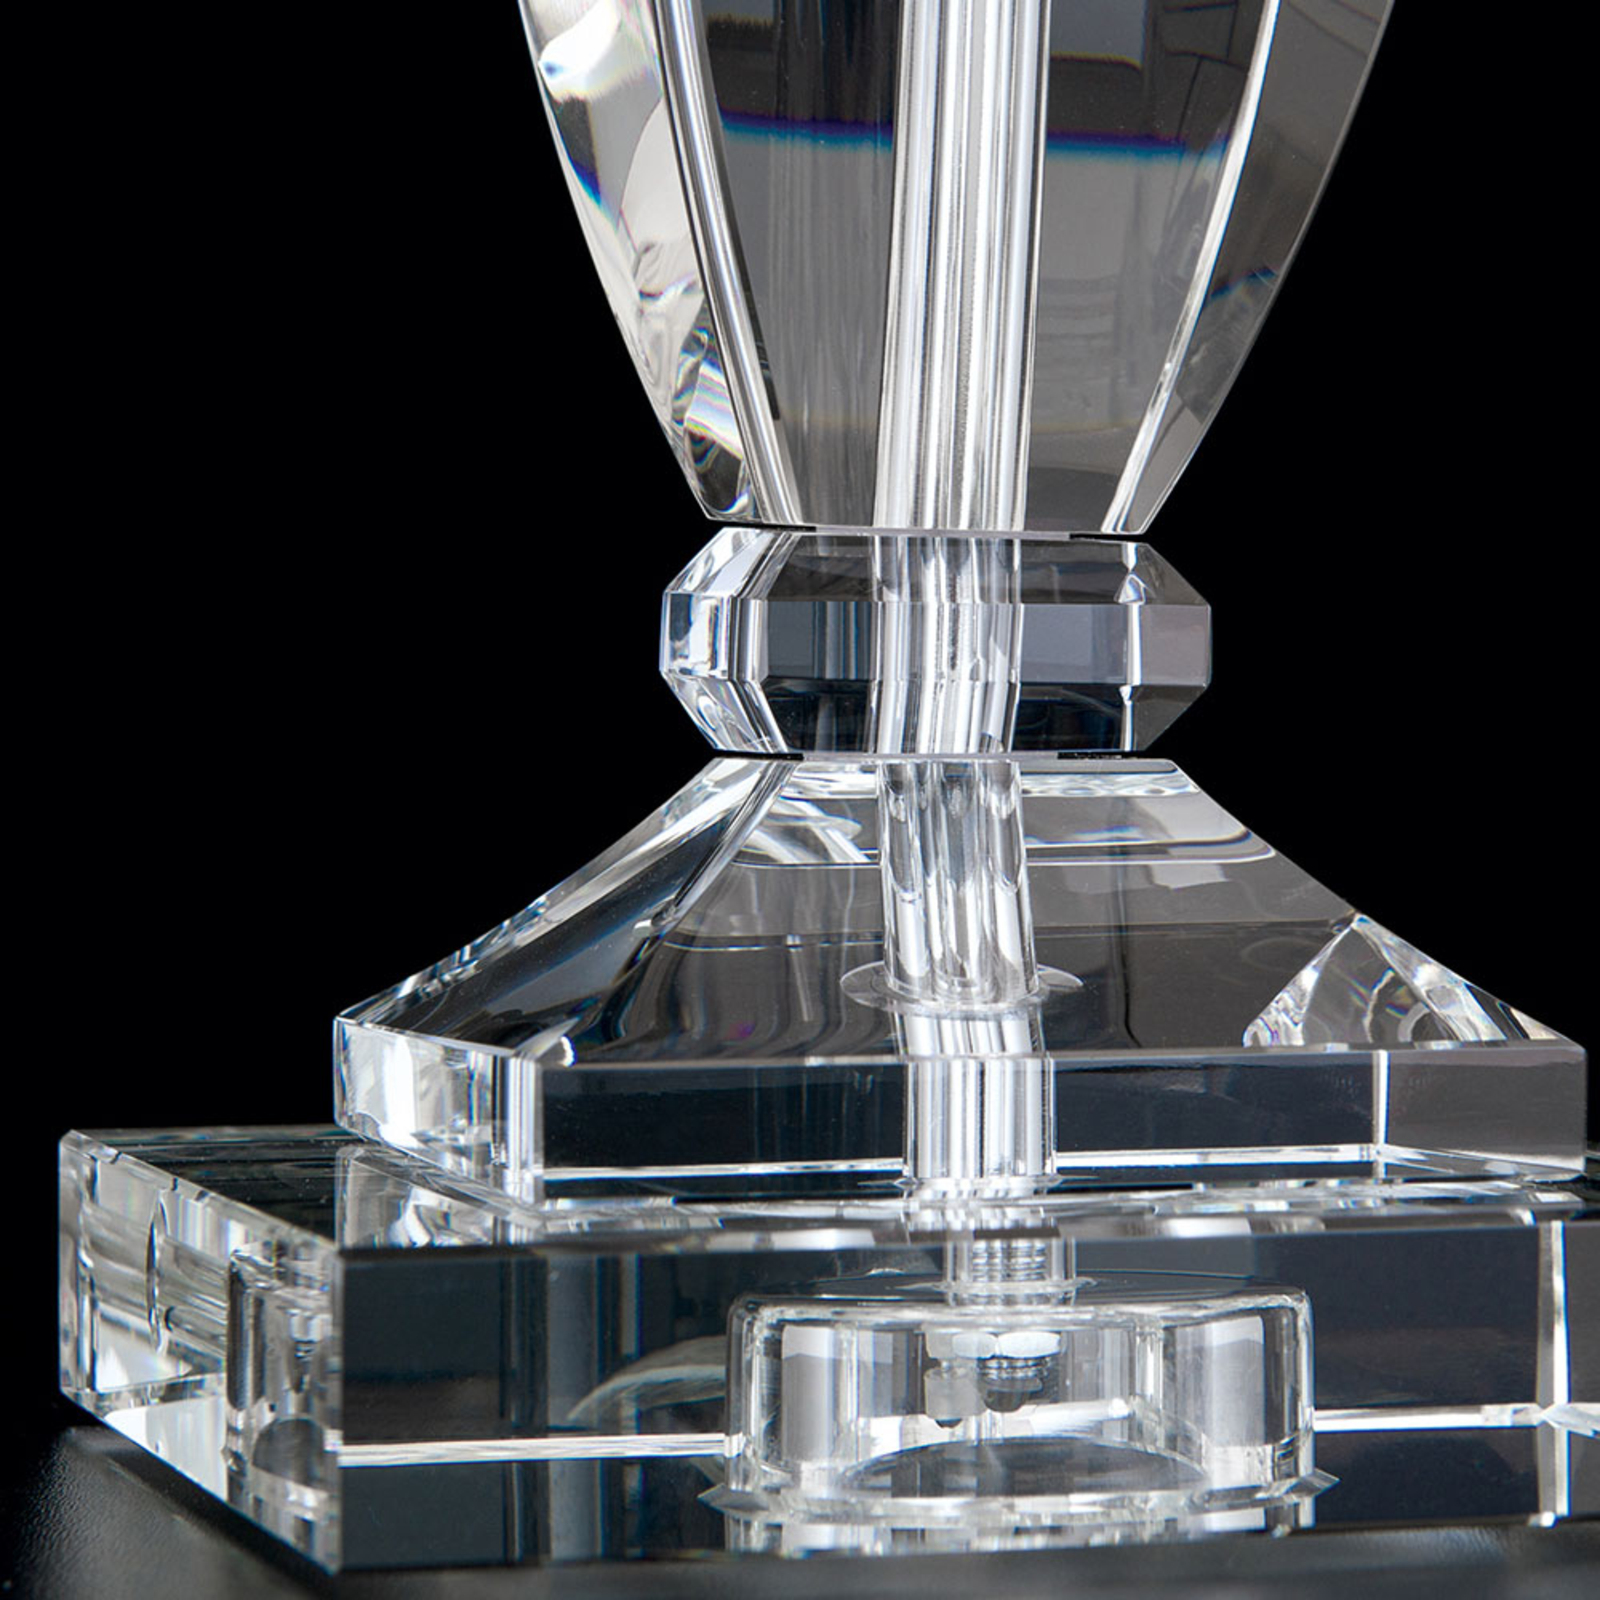 Tafellamp Pokal met kristal chroom/wit